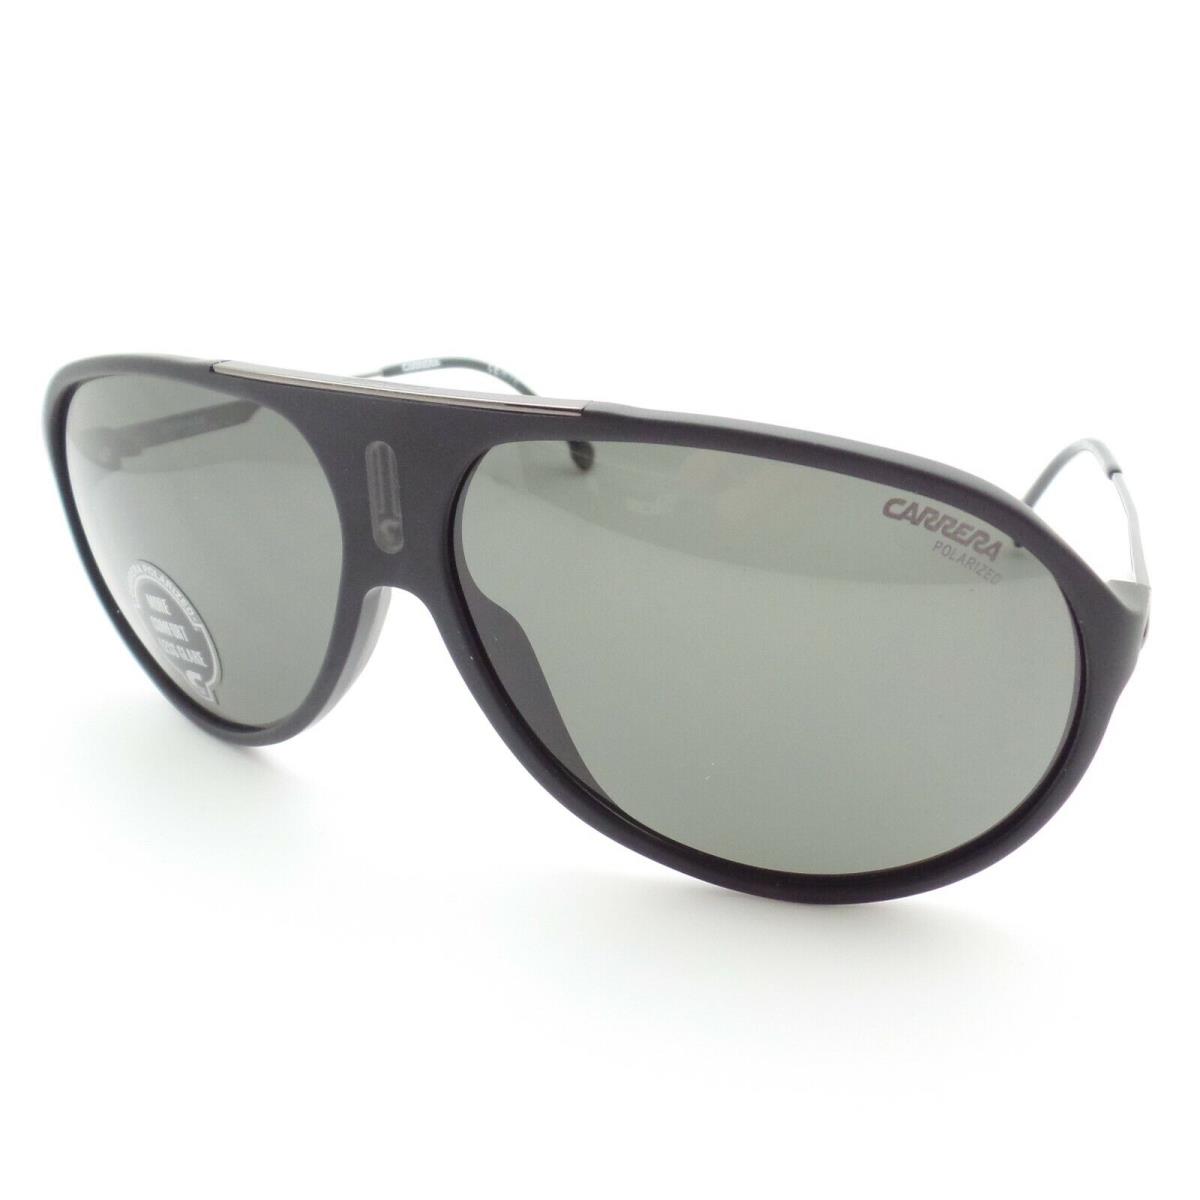 Carrera Hot 65 003M9 Matte Black Green Polarized Sunglasses - Frame: Matte Black, Lens: Grey